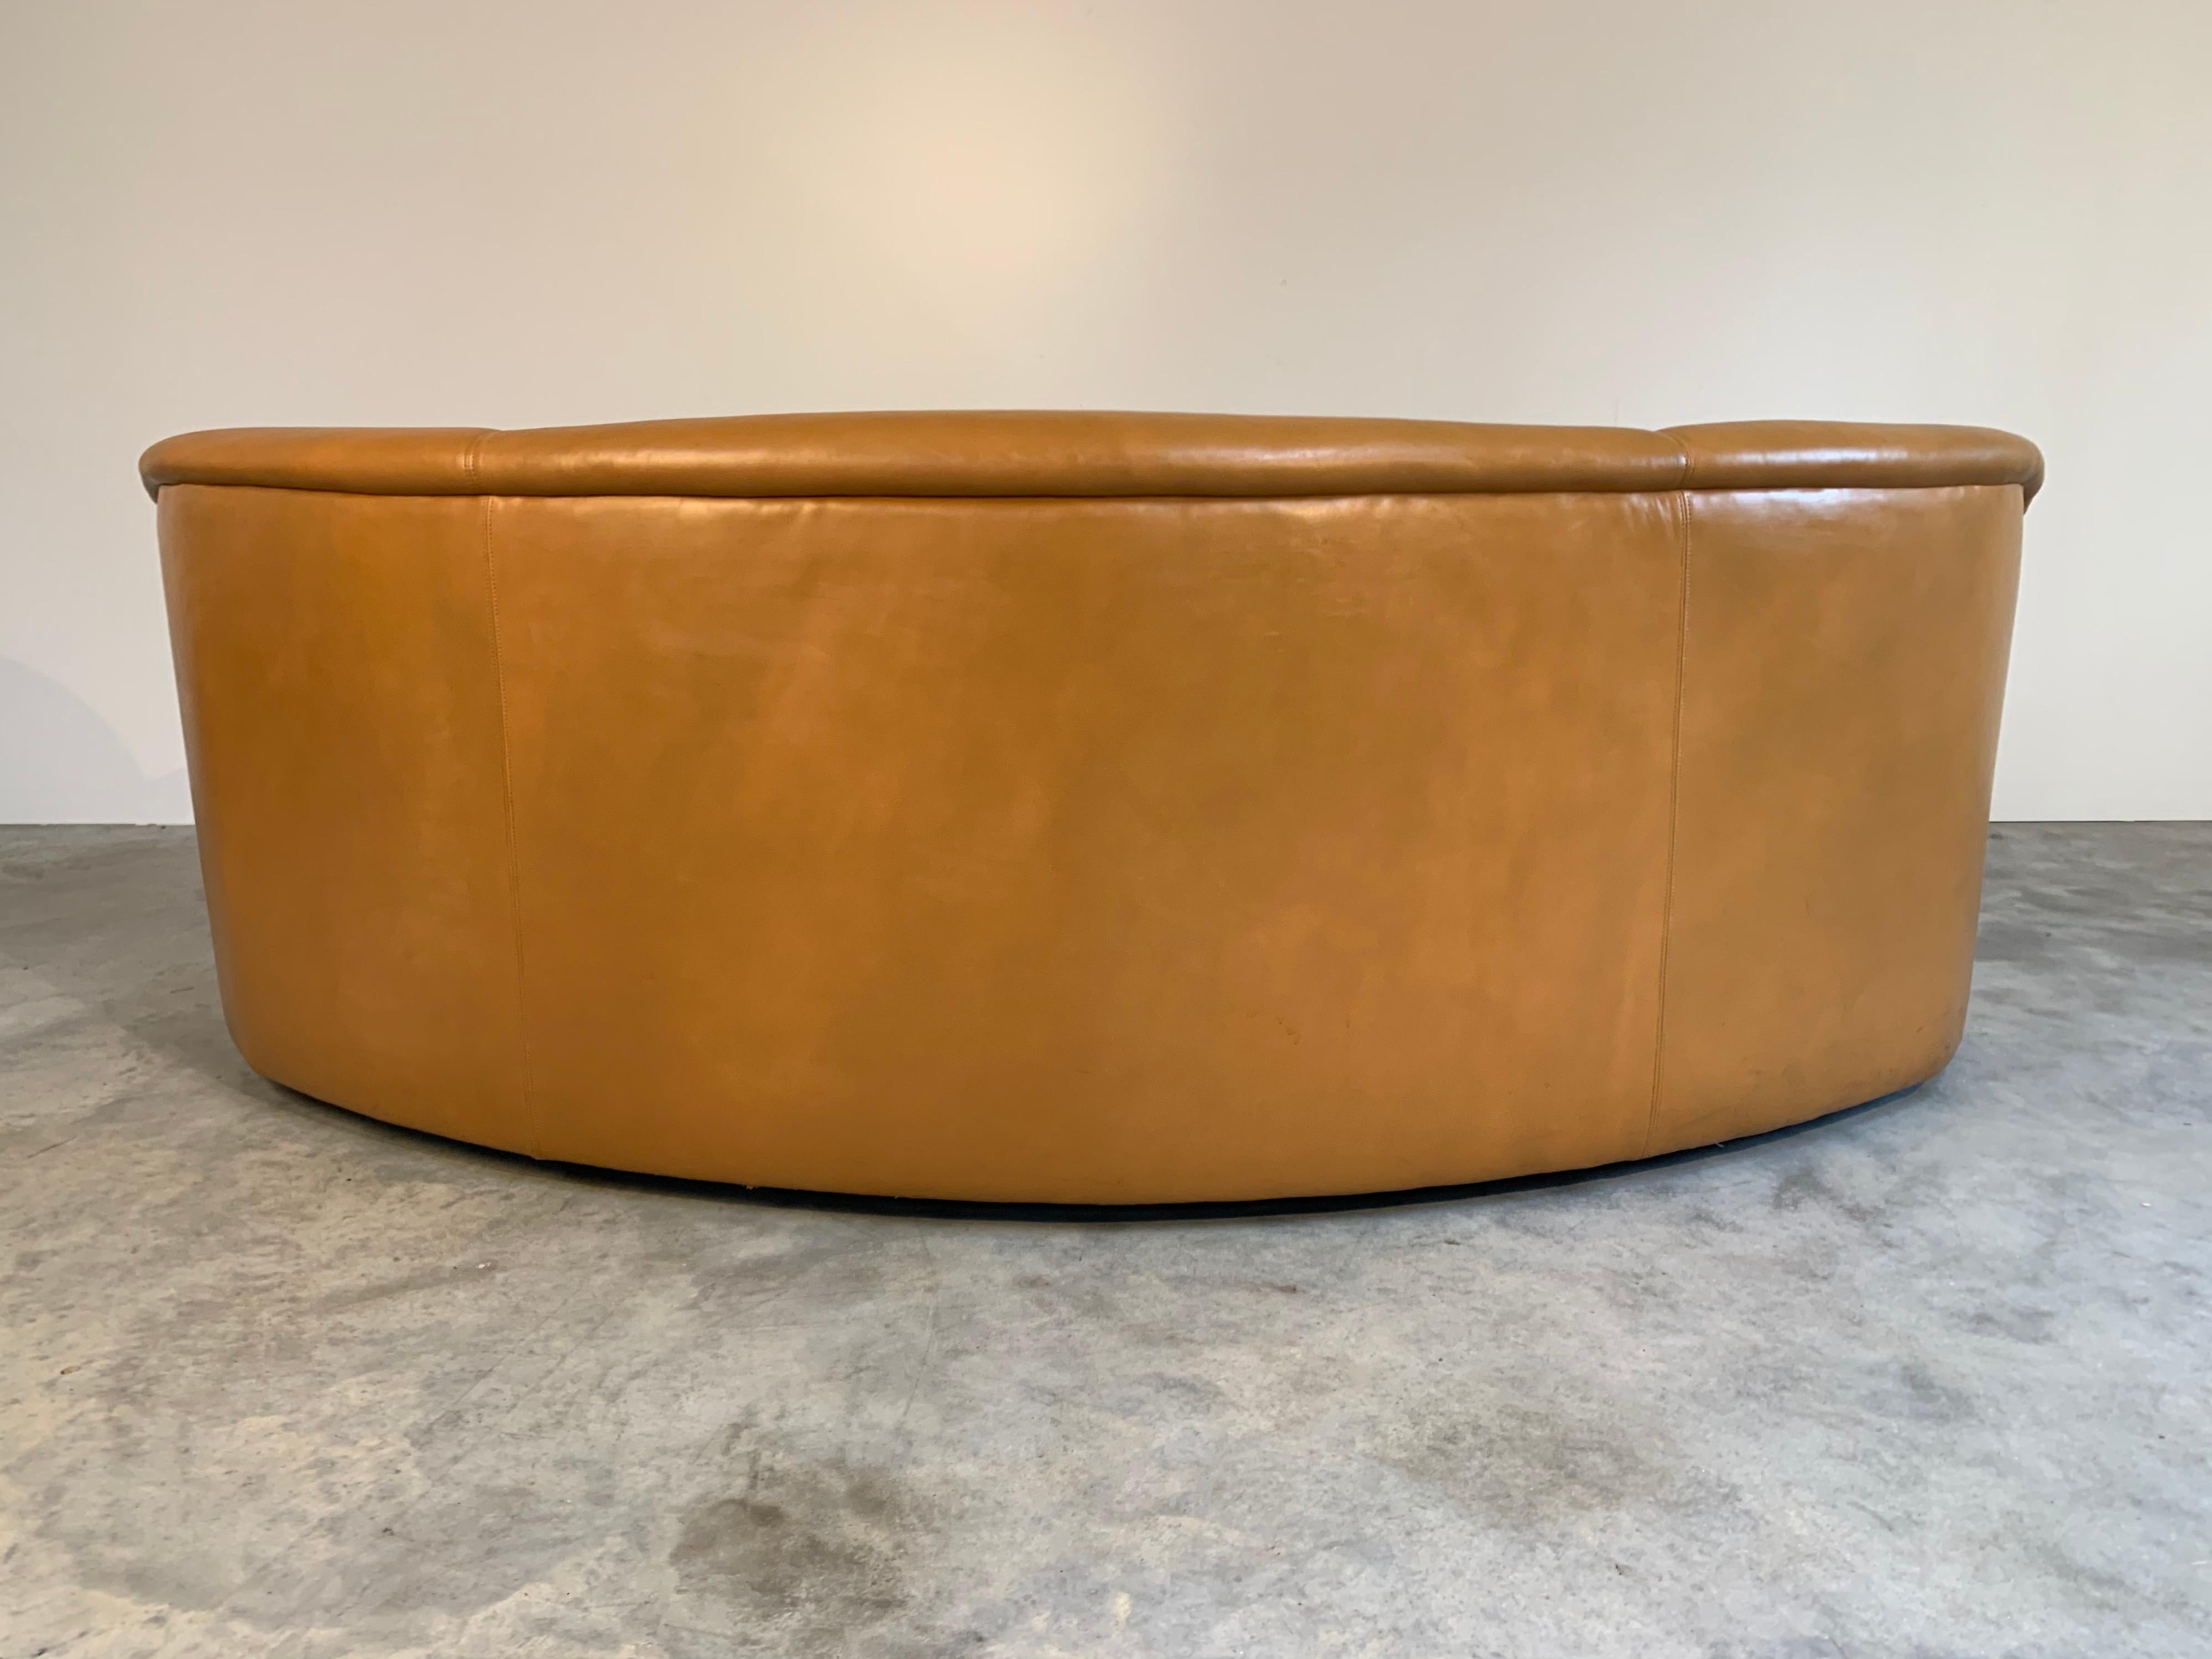 Steel Vladimir Kagan Sofa for Directional Biomorphic Kidney Form in Caramel Leather